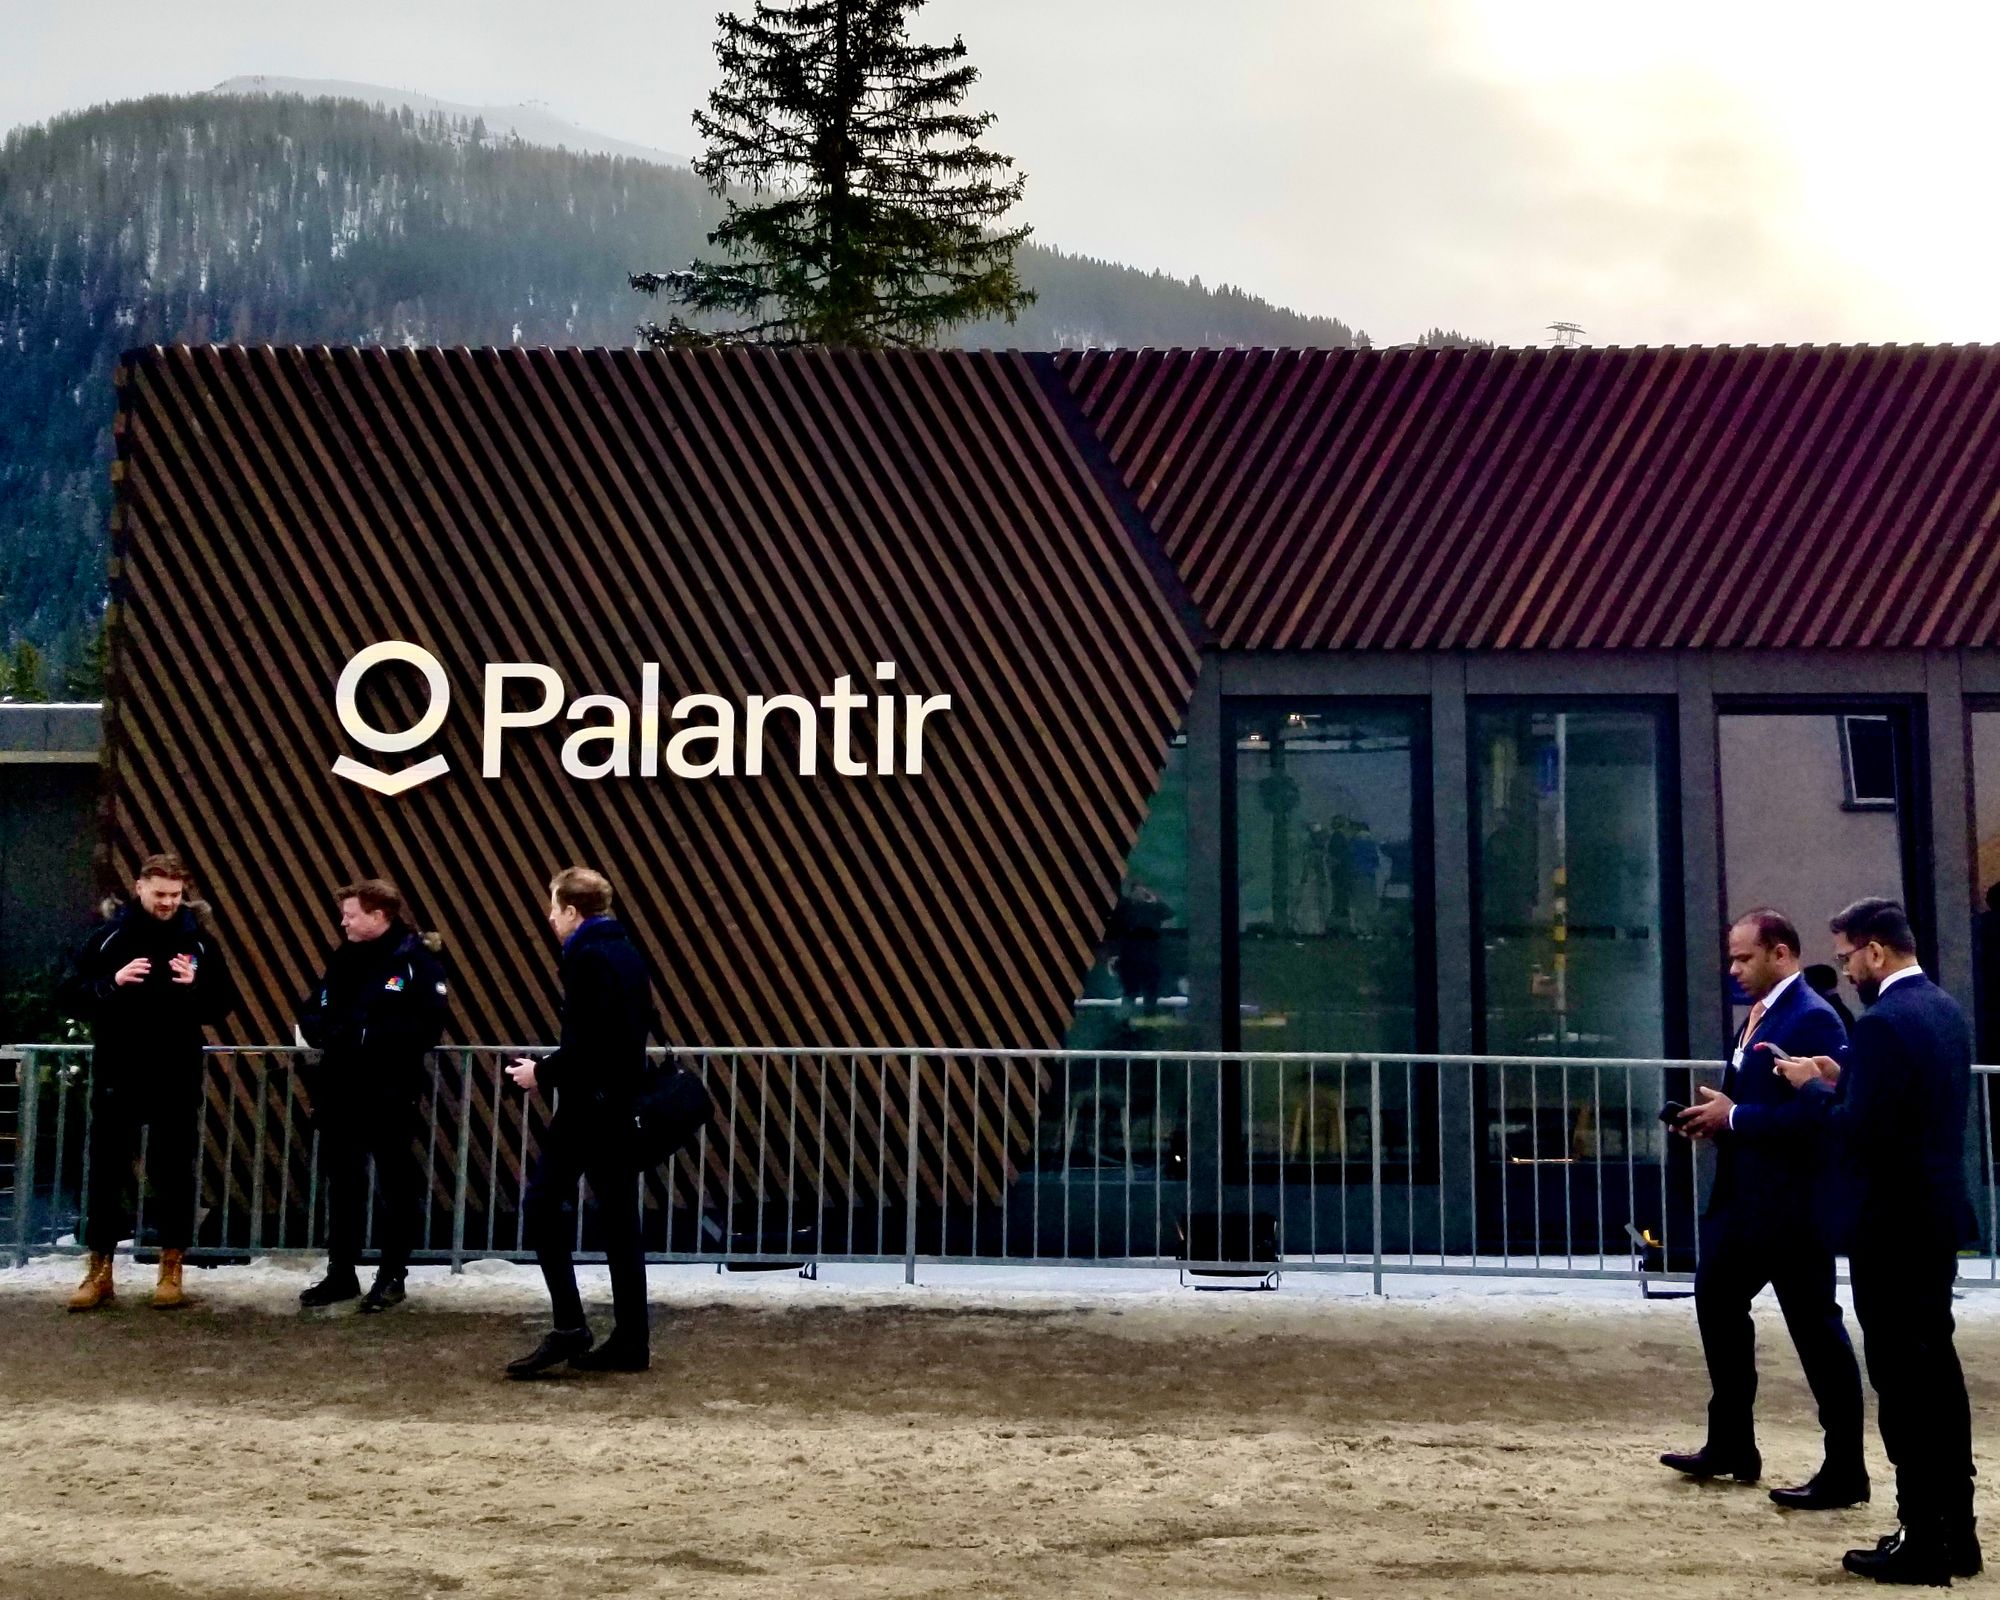 The Palantir pavilion at the 2023 World Economic Forum in Davos, Switzerland